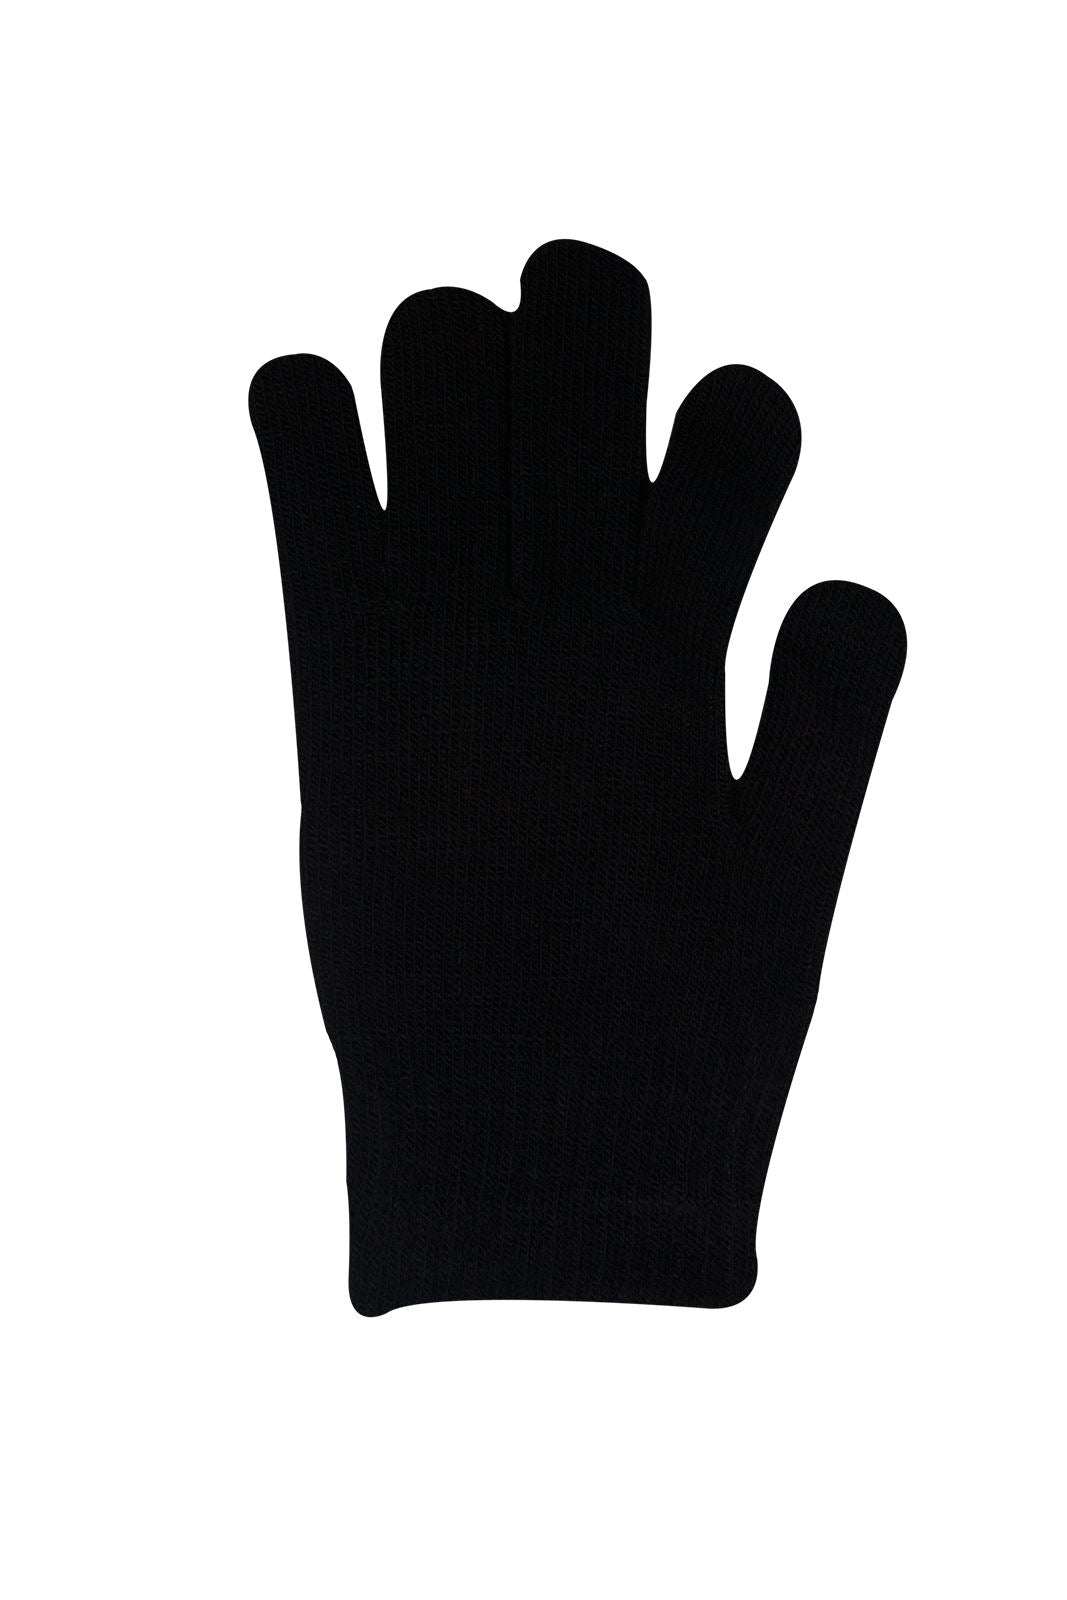 Ladies Girls MAGIC Gloves Stretchy Warm Winter Magic Gloves Black